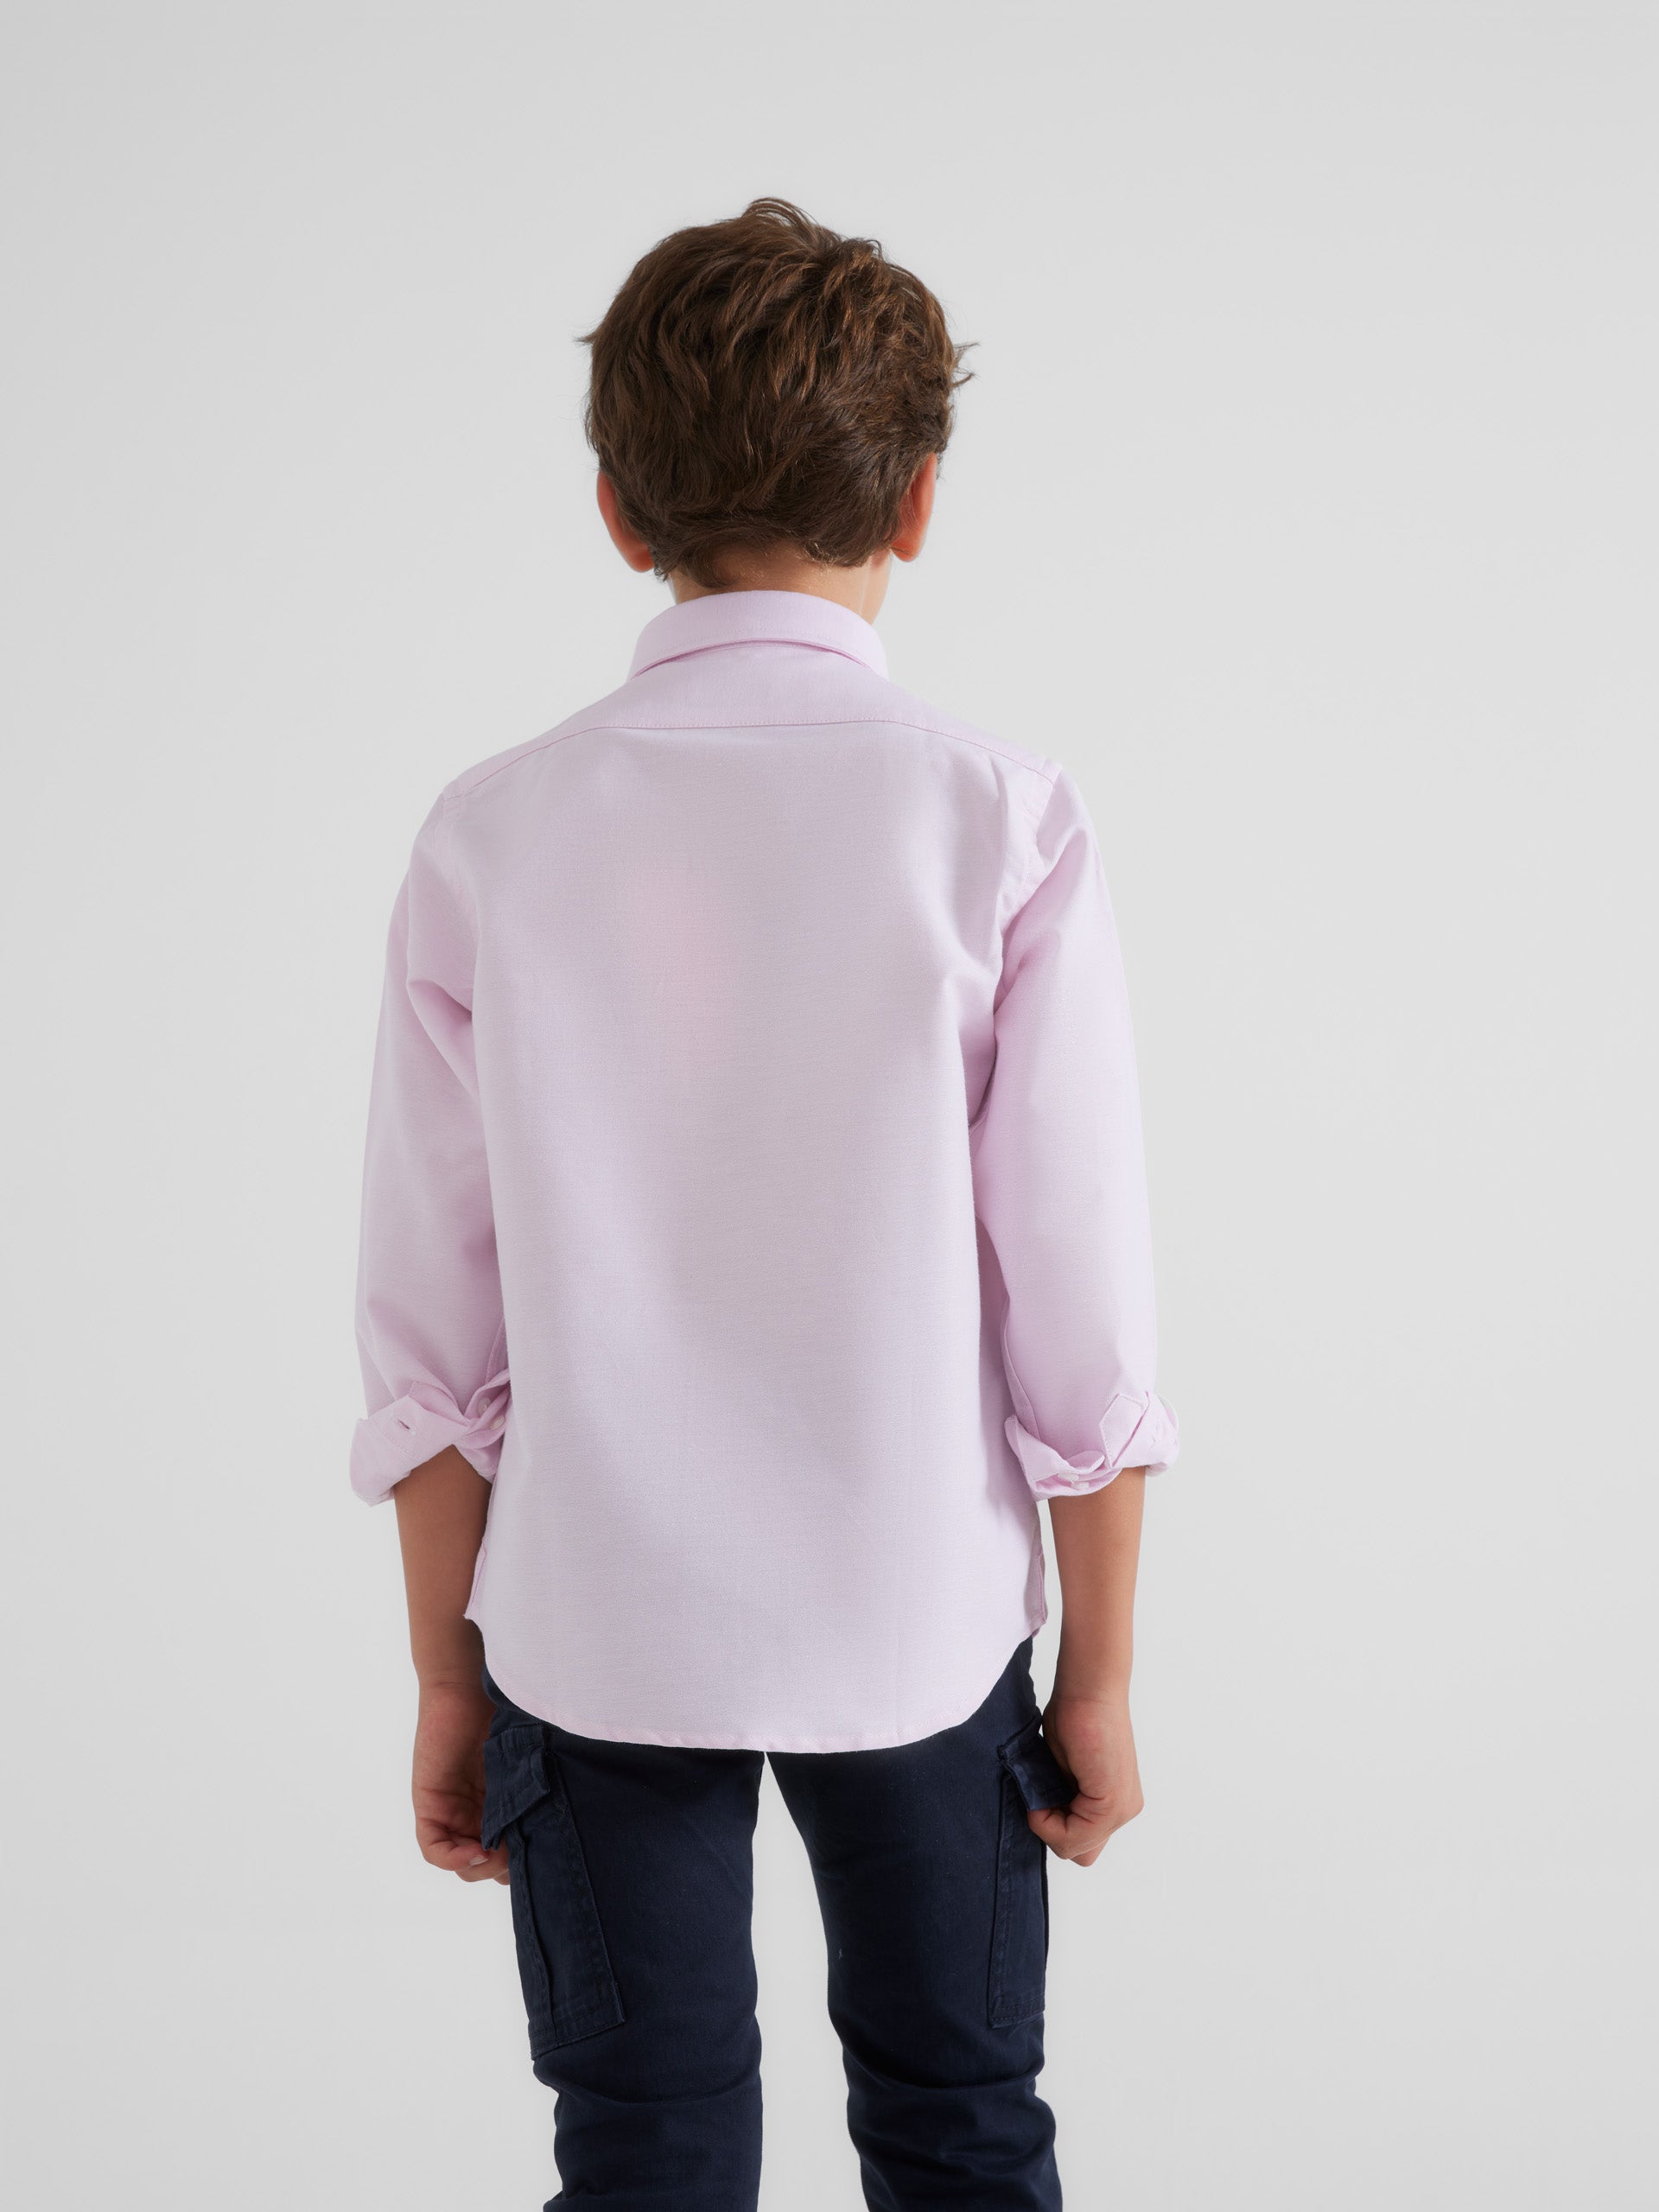 Camisa sport kids oxford style rosa